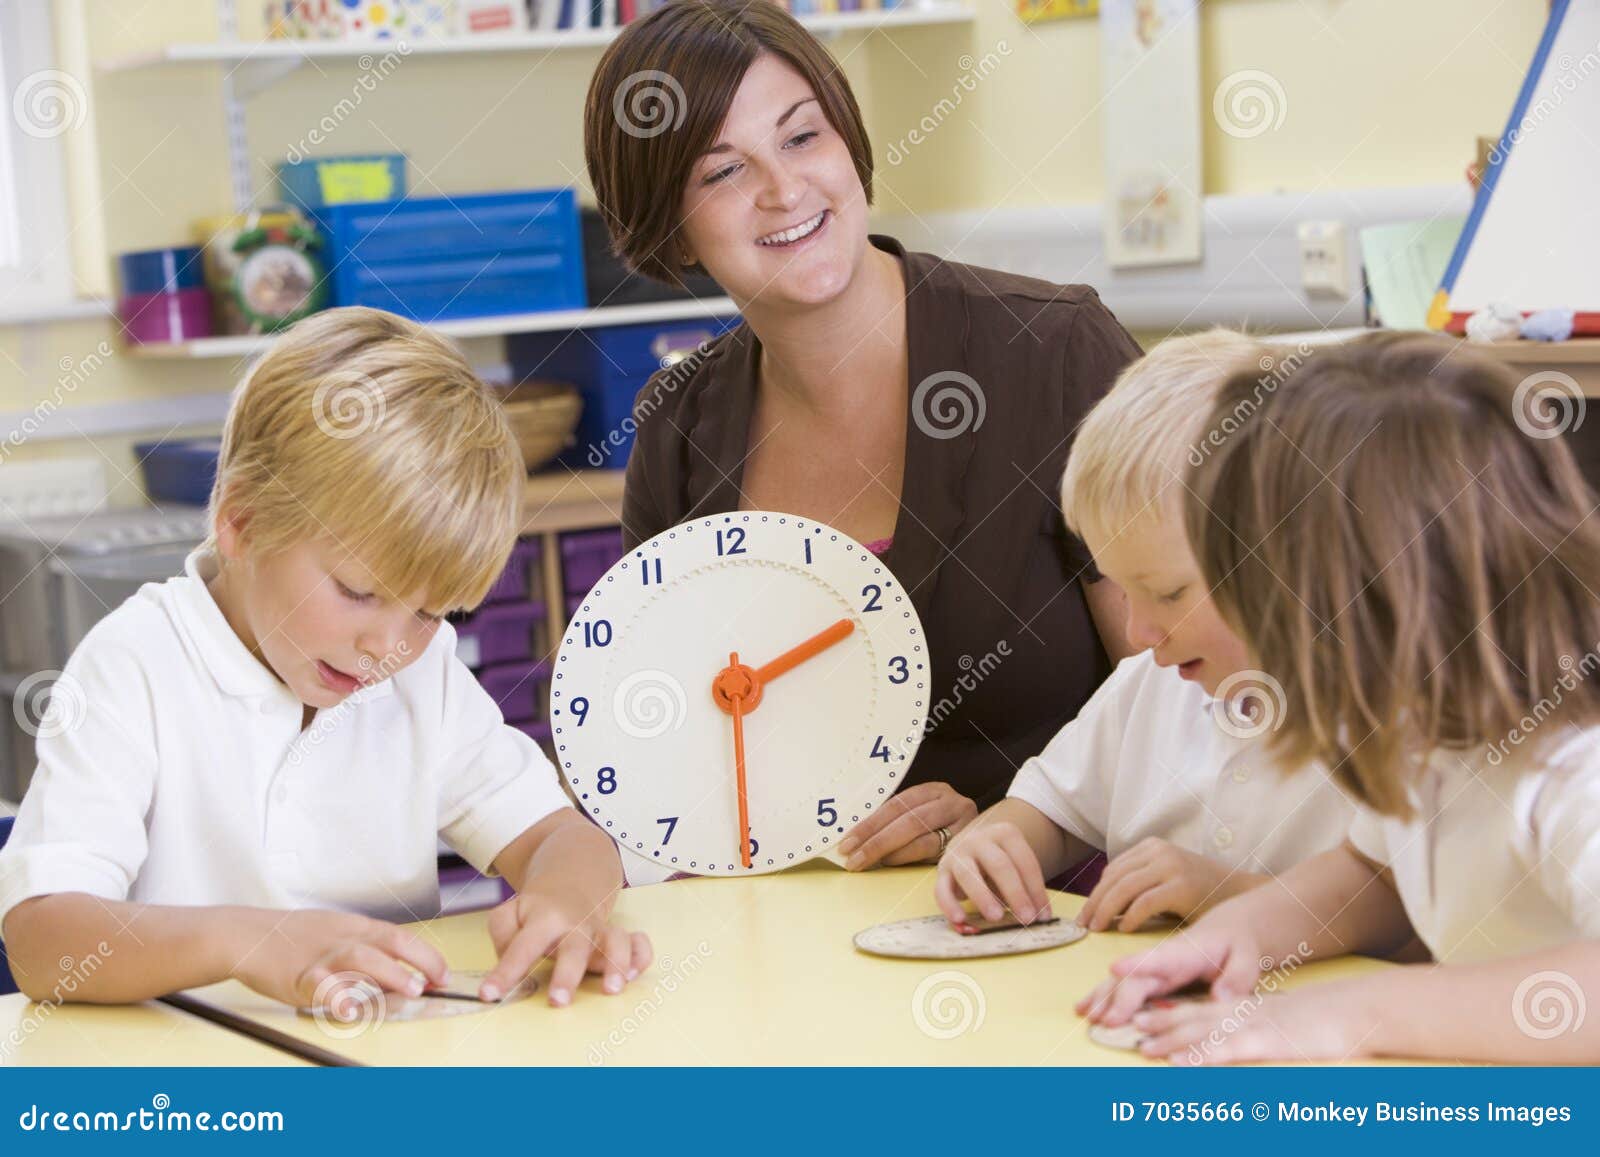 teacher helping schoolchildren learn to tell time